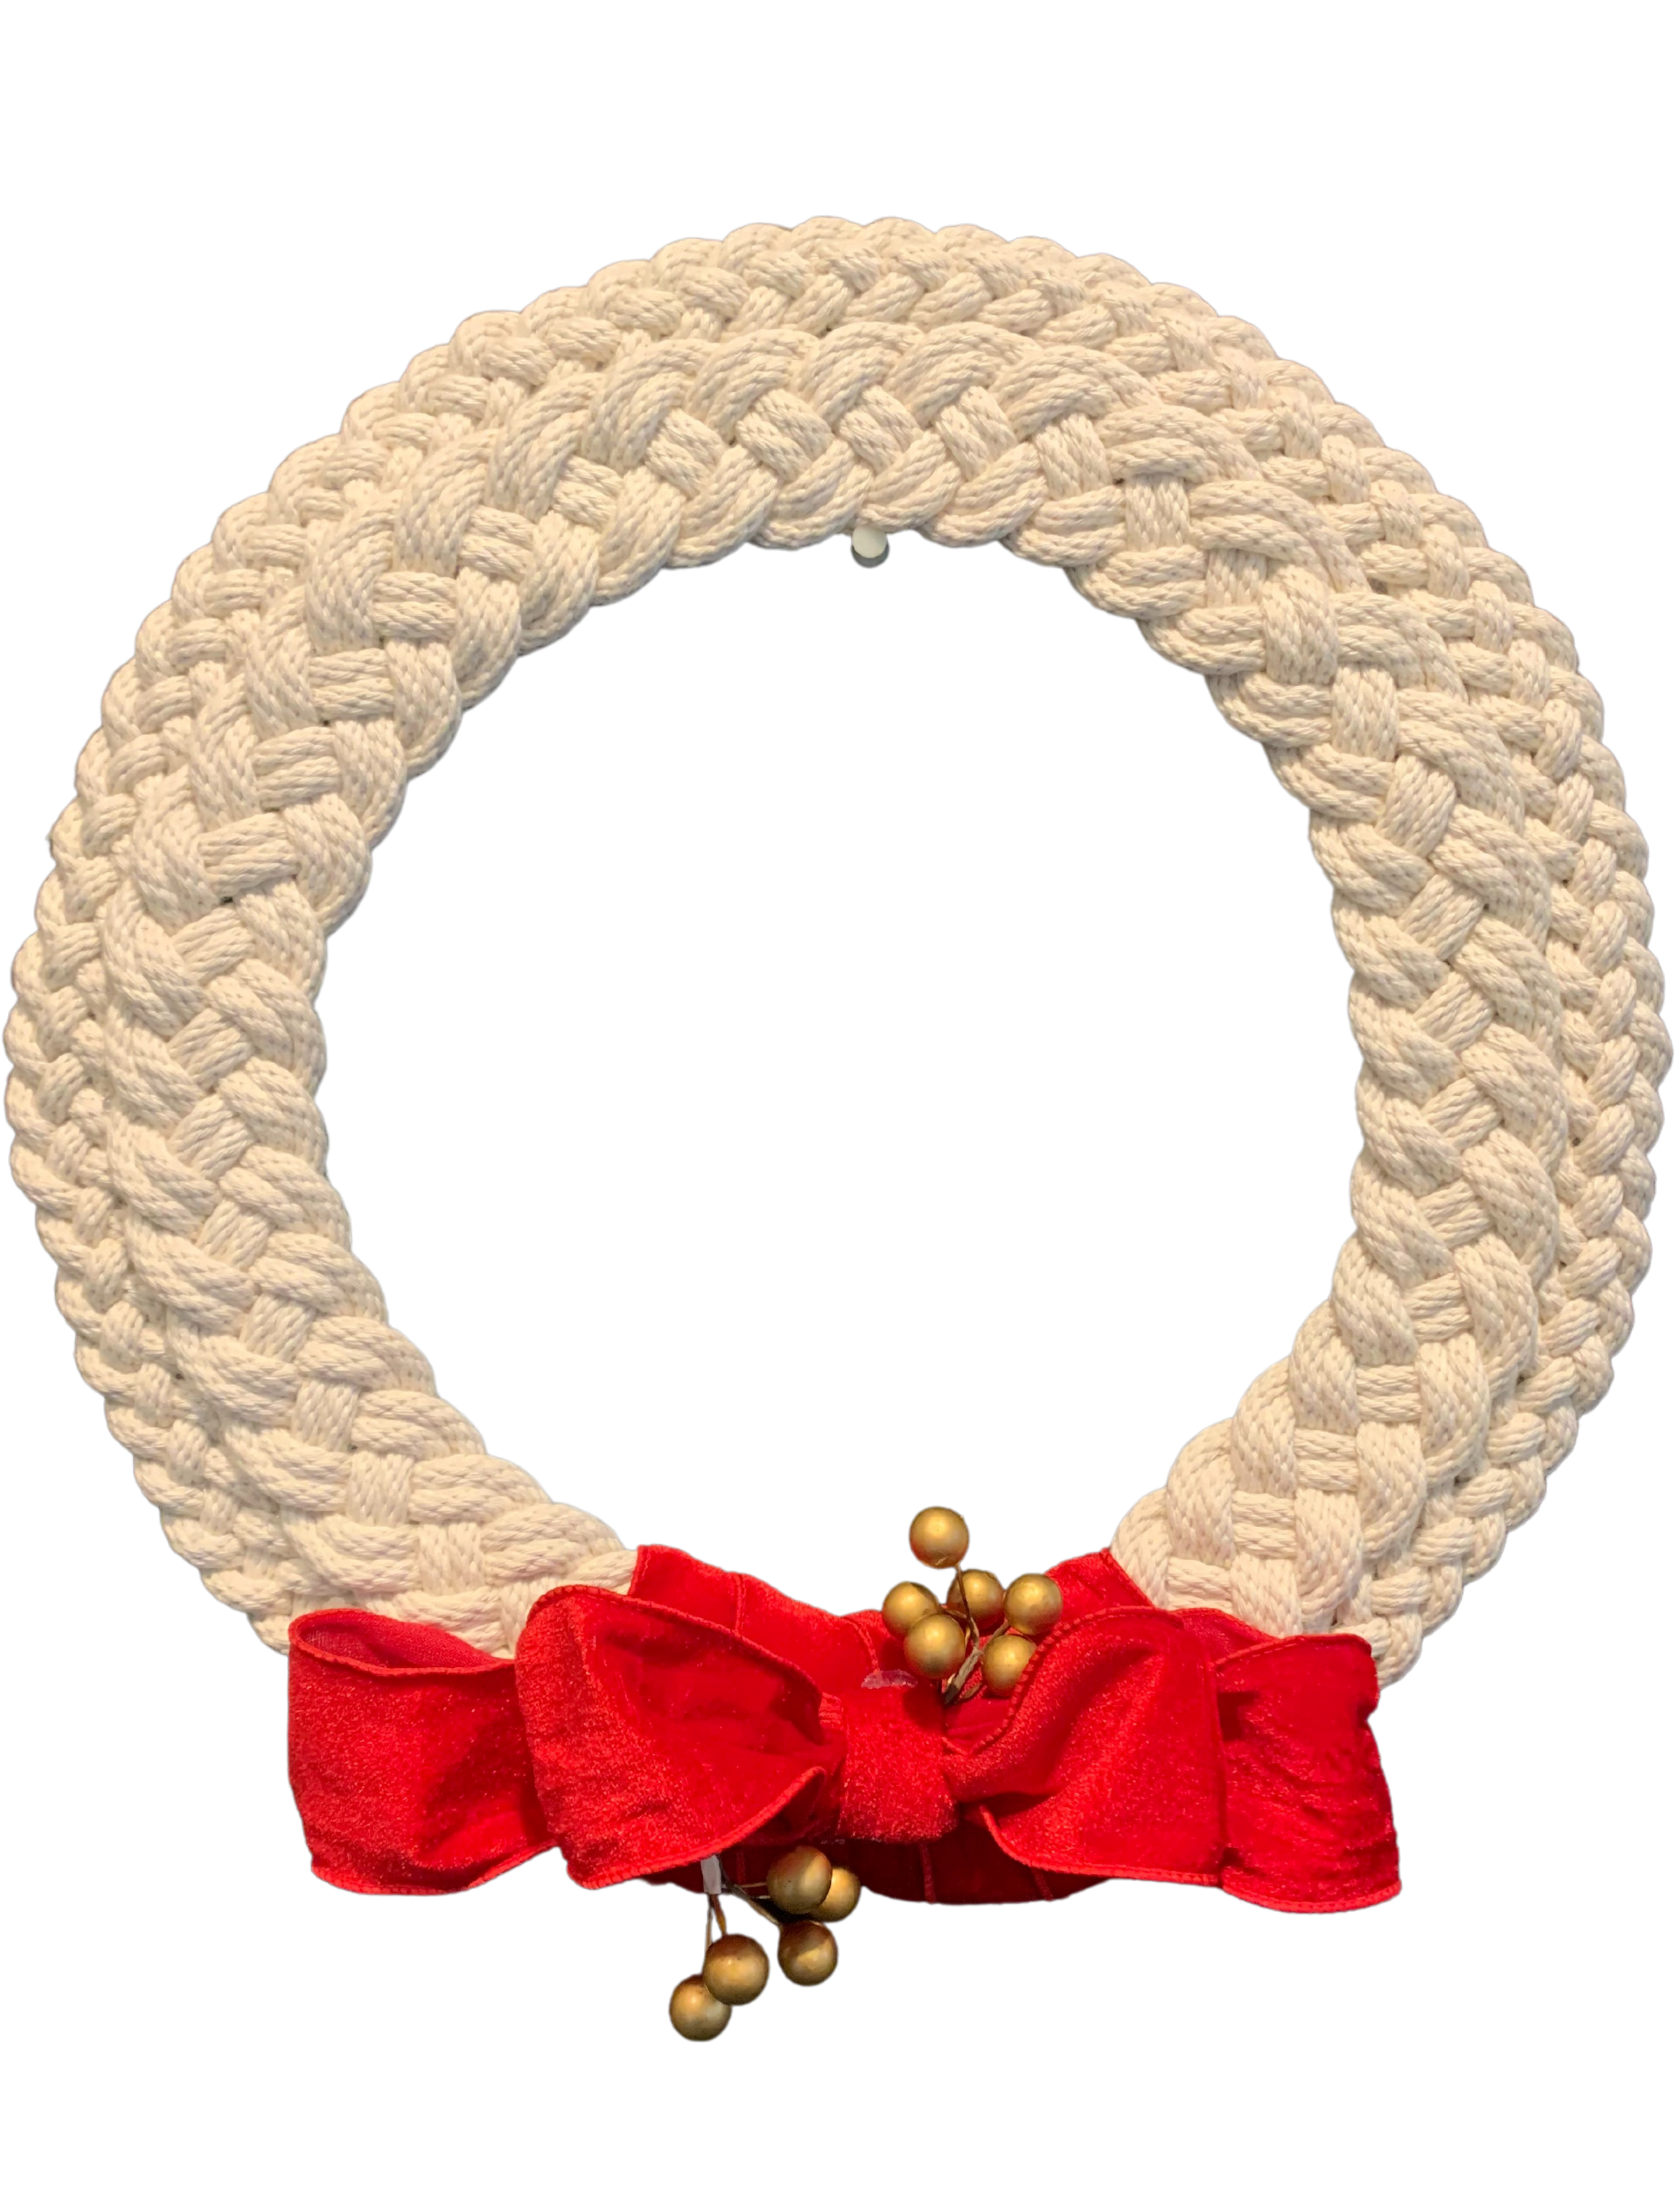 Craft: Braided Nautical Rope Wreath - Wayland Free Public Library